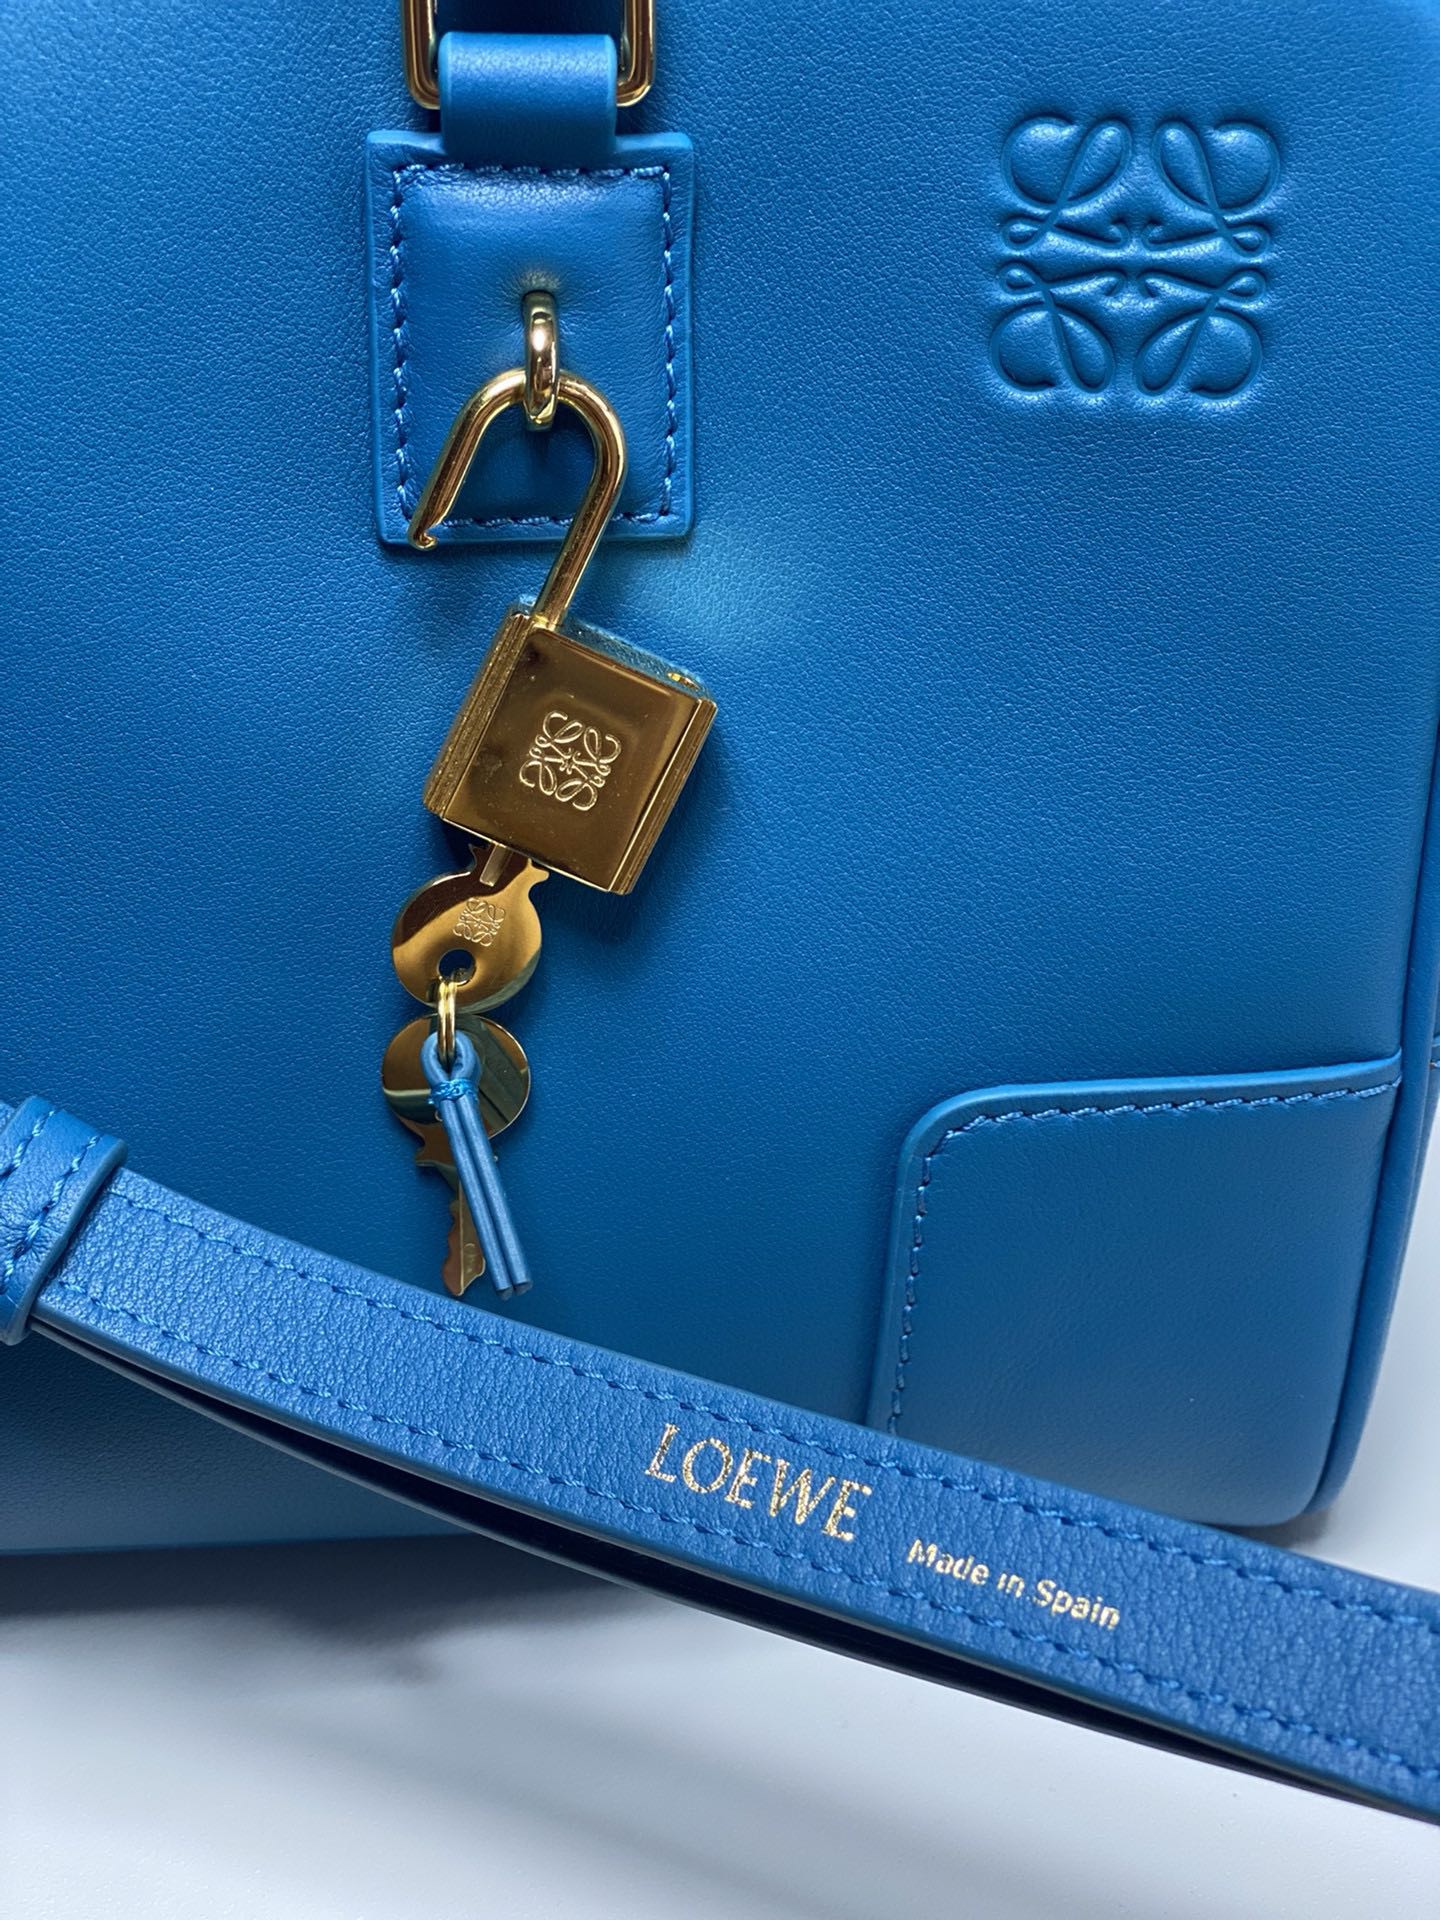 Loewe Original Leather tote 652388 blue